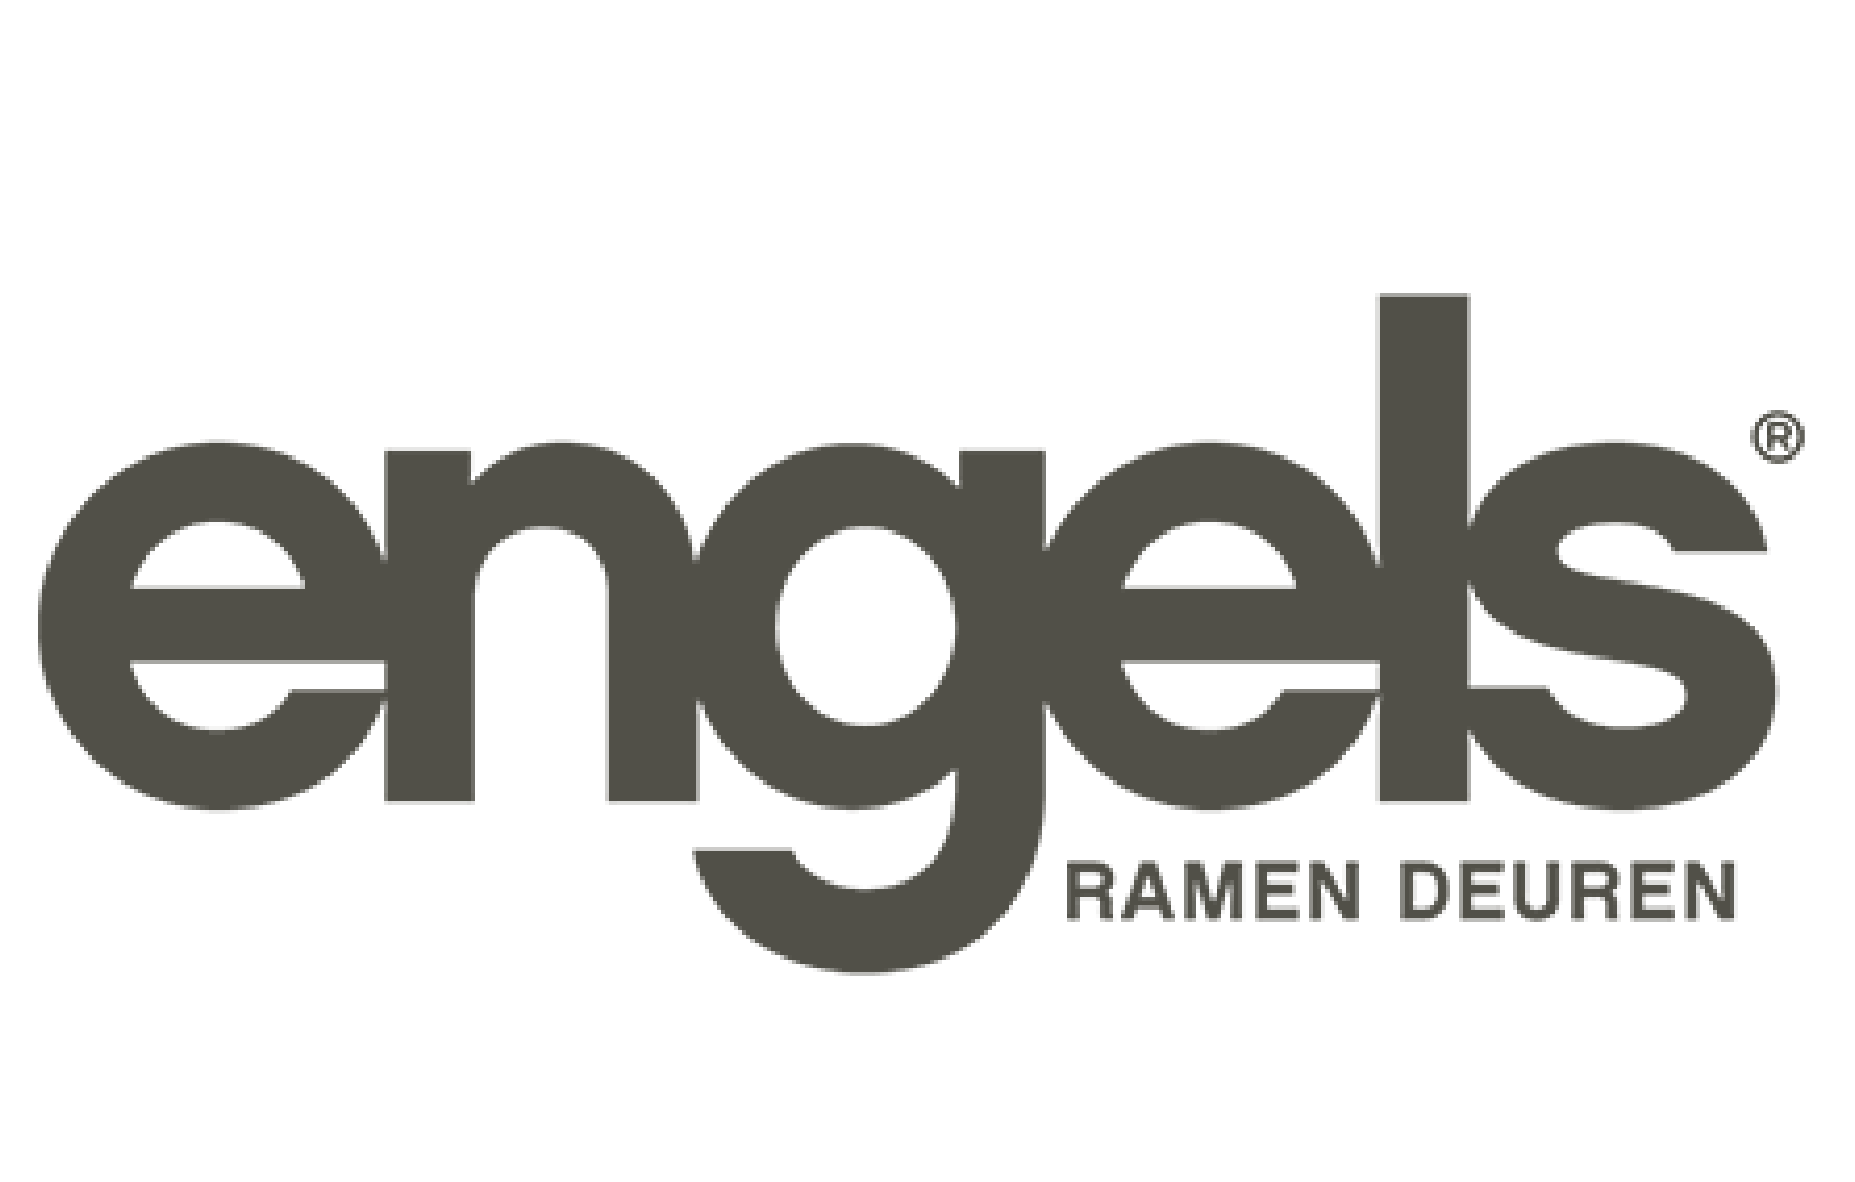 engels-logo-nl2-01